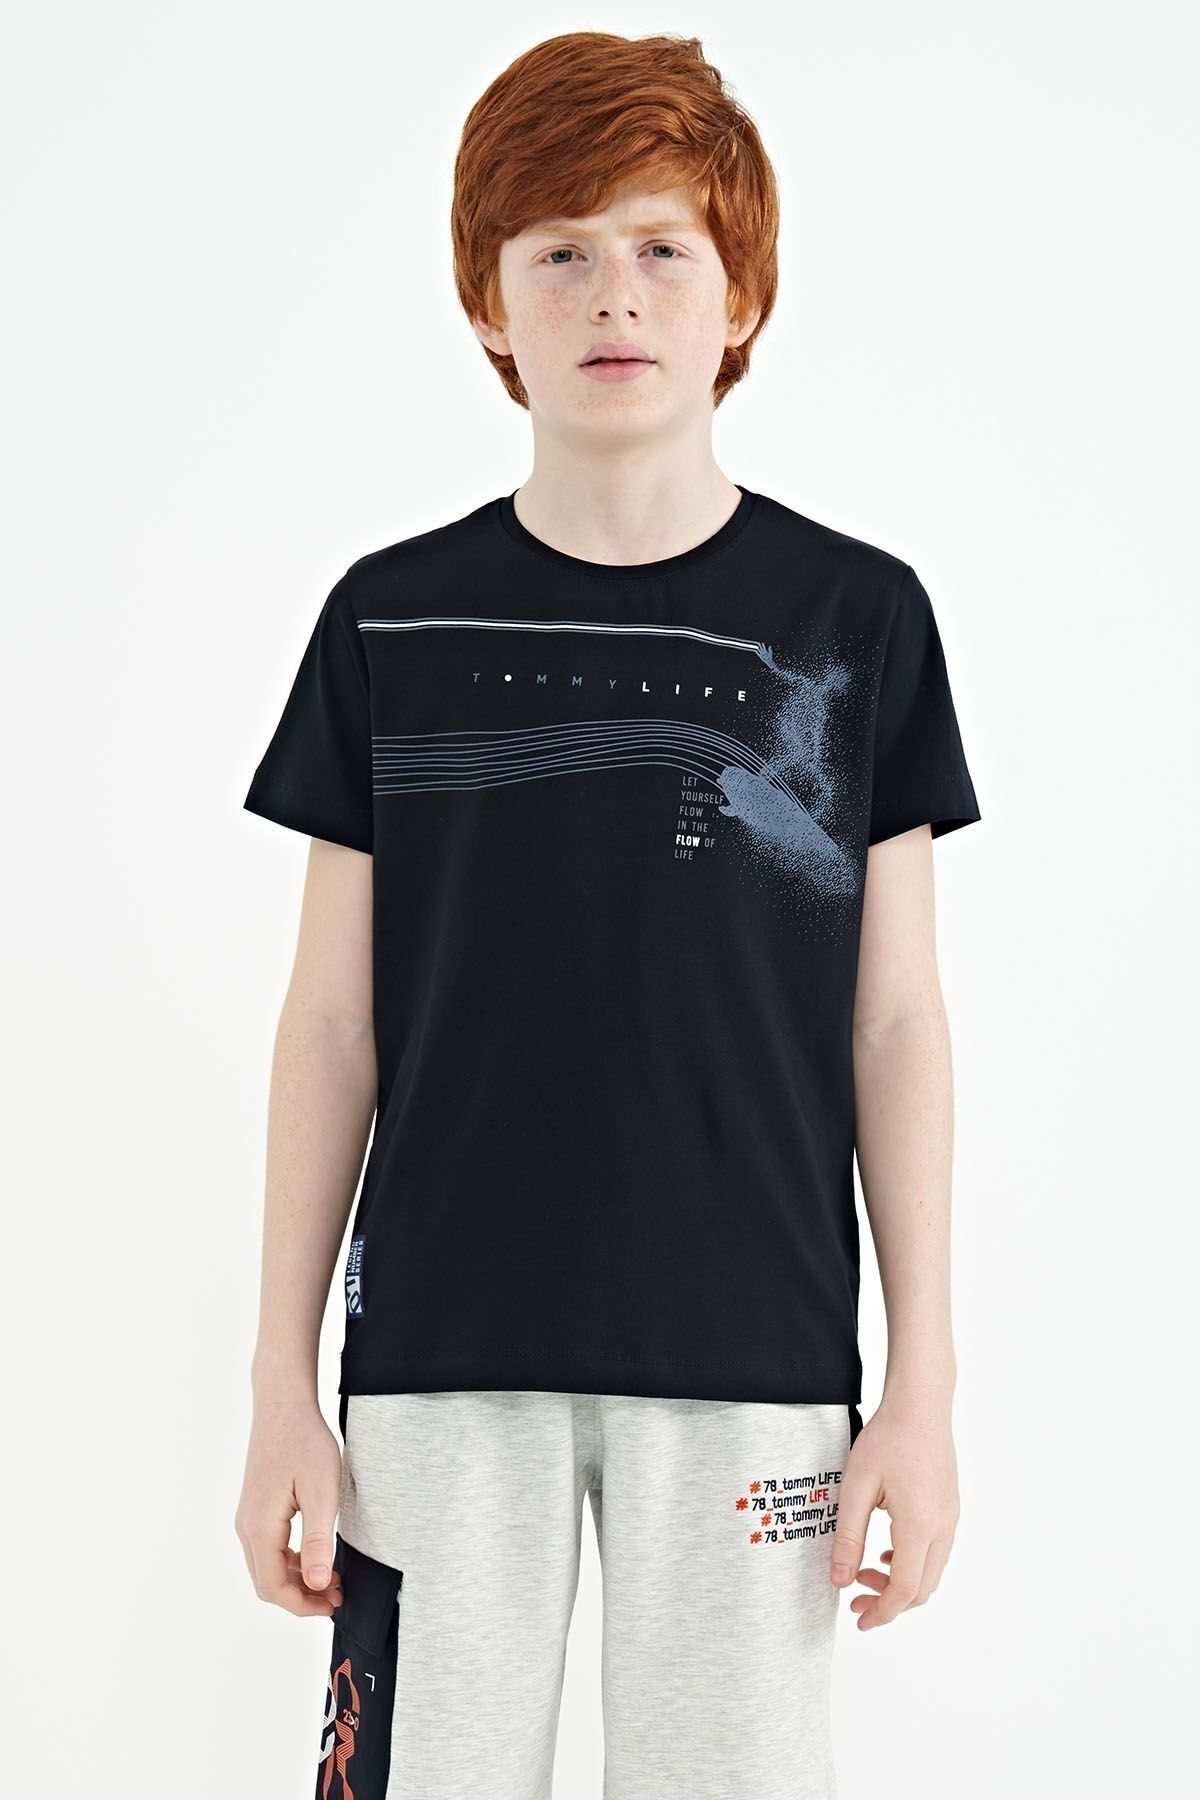 TOMMY LIFE Lacivert Baskı Detaylı Standart Kalıp O Yaka Erkek Çocuk T-shirt - 11133